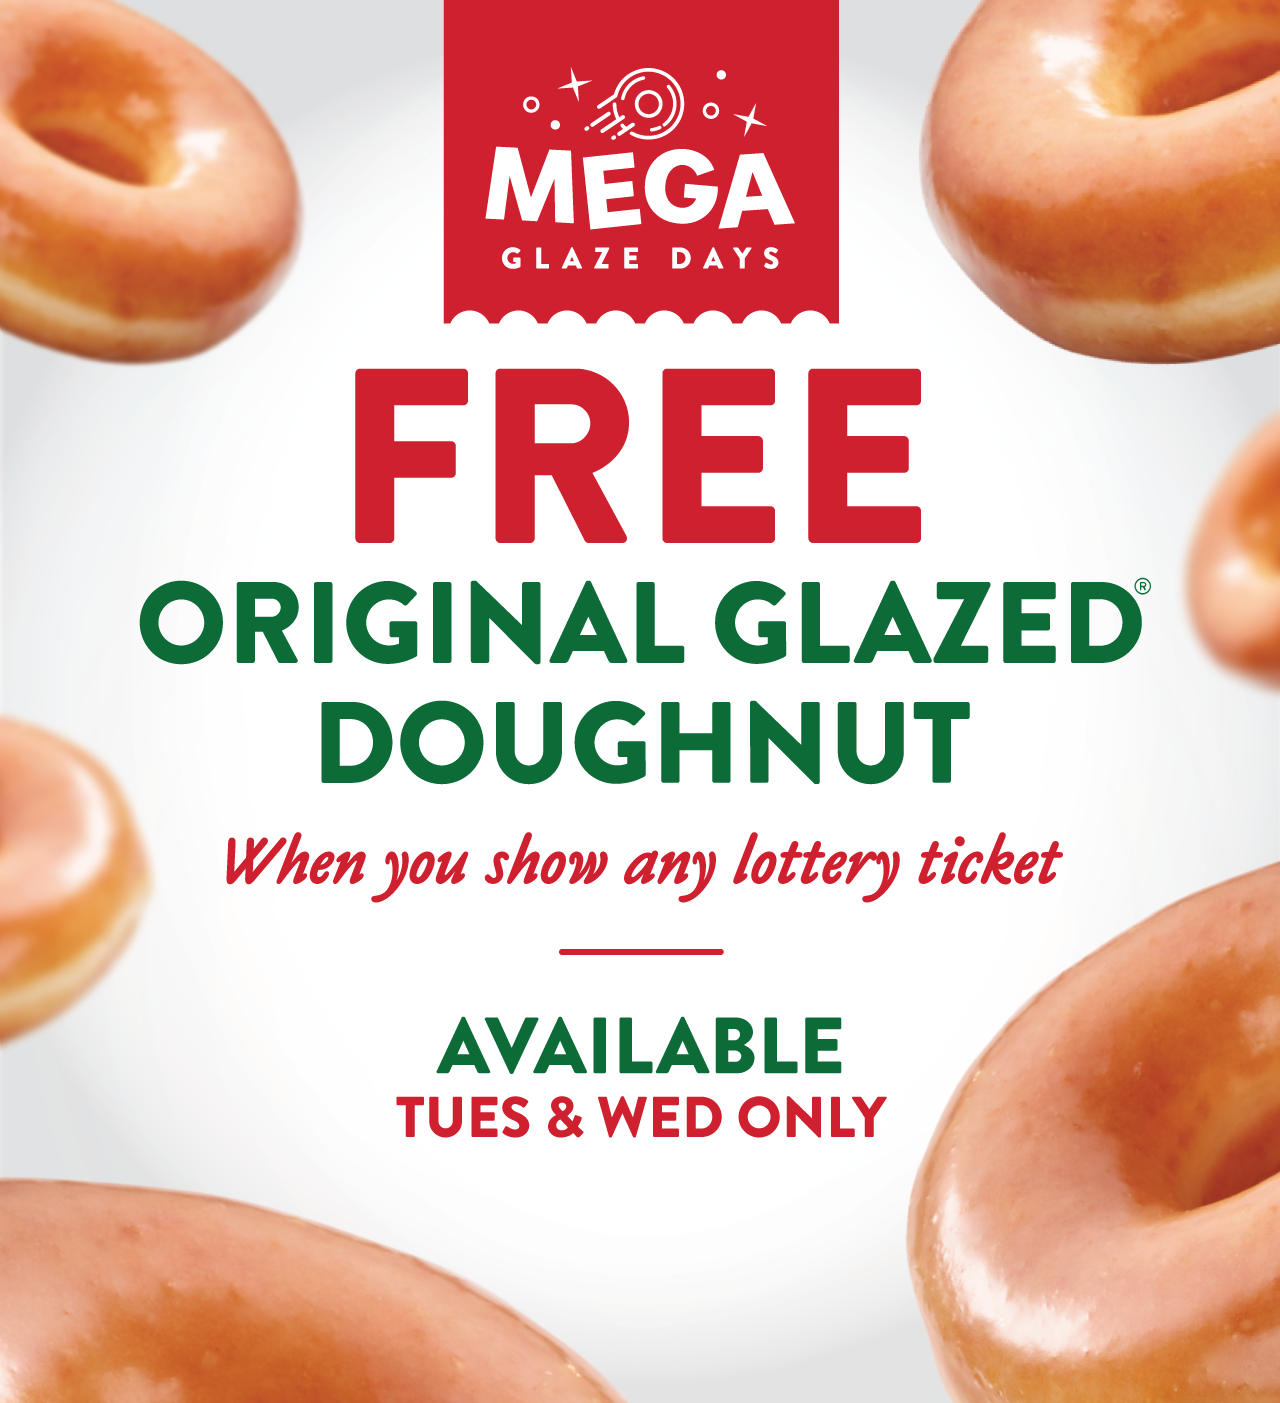 FREE Glazed Doughnut at Krispy Kreme